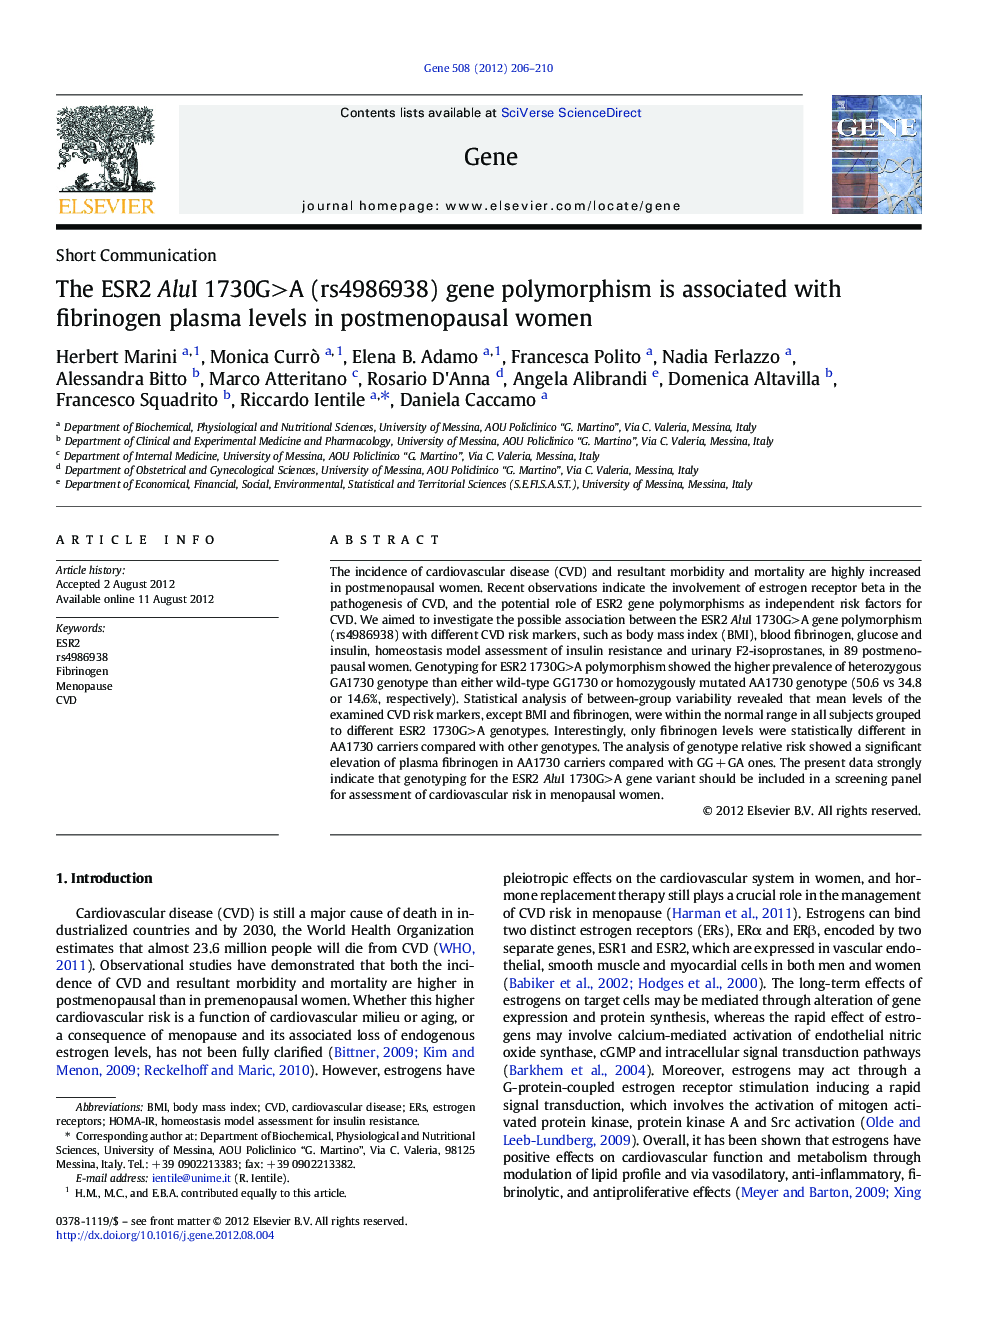 Short CommunicationThe ESR2 AluI 1730G>A (rs4986938) gene polymorphism is associated with fibrinogen plasma levels in postmenopausal women